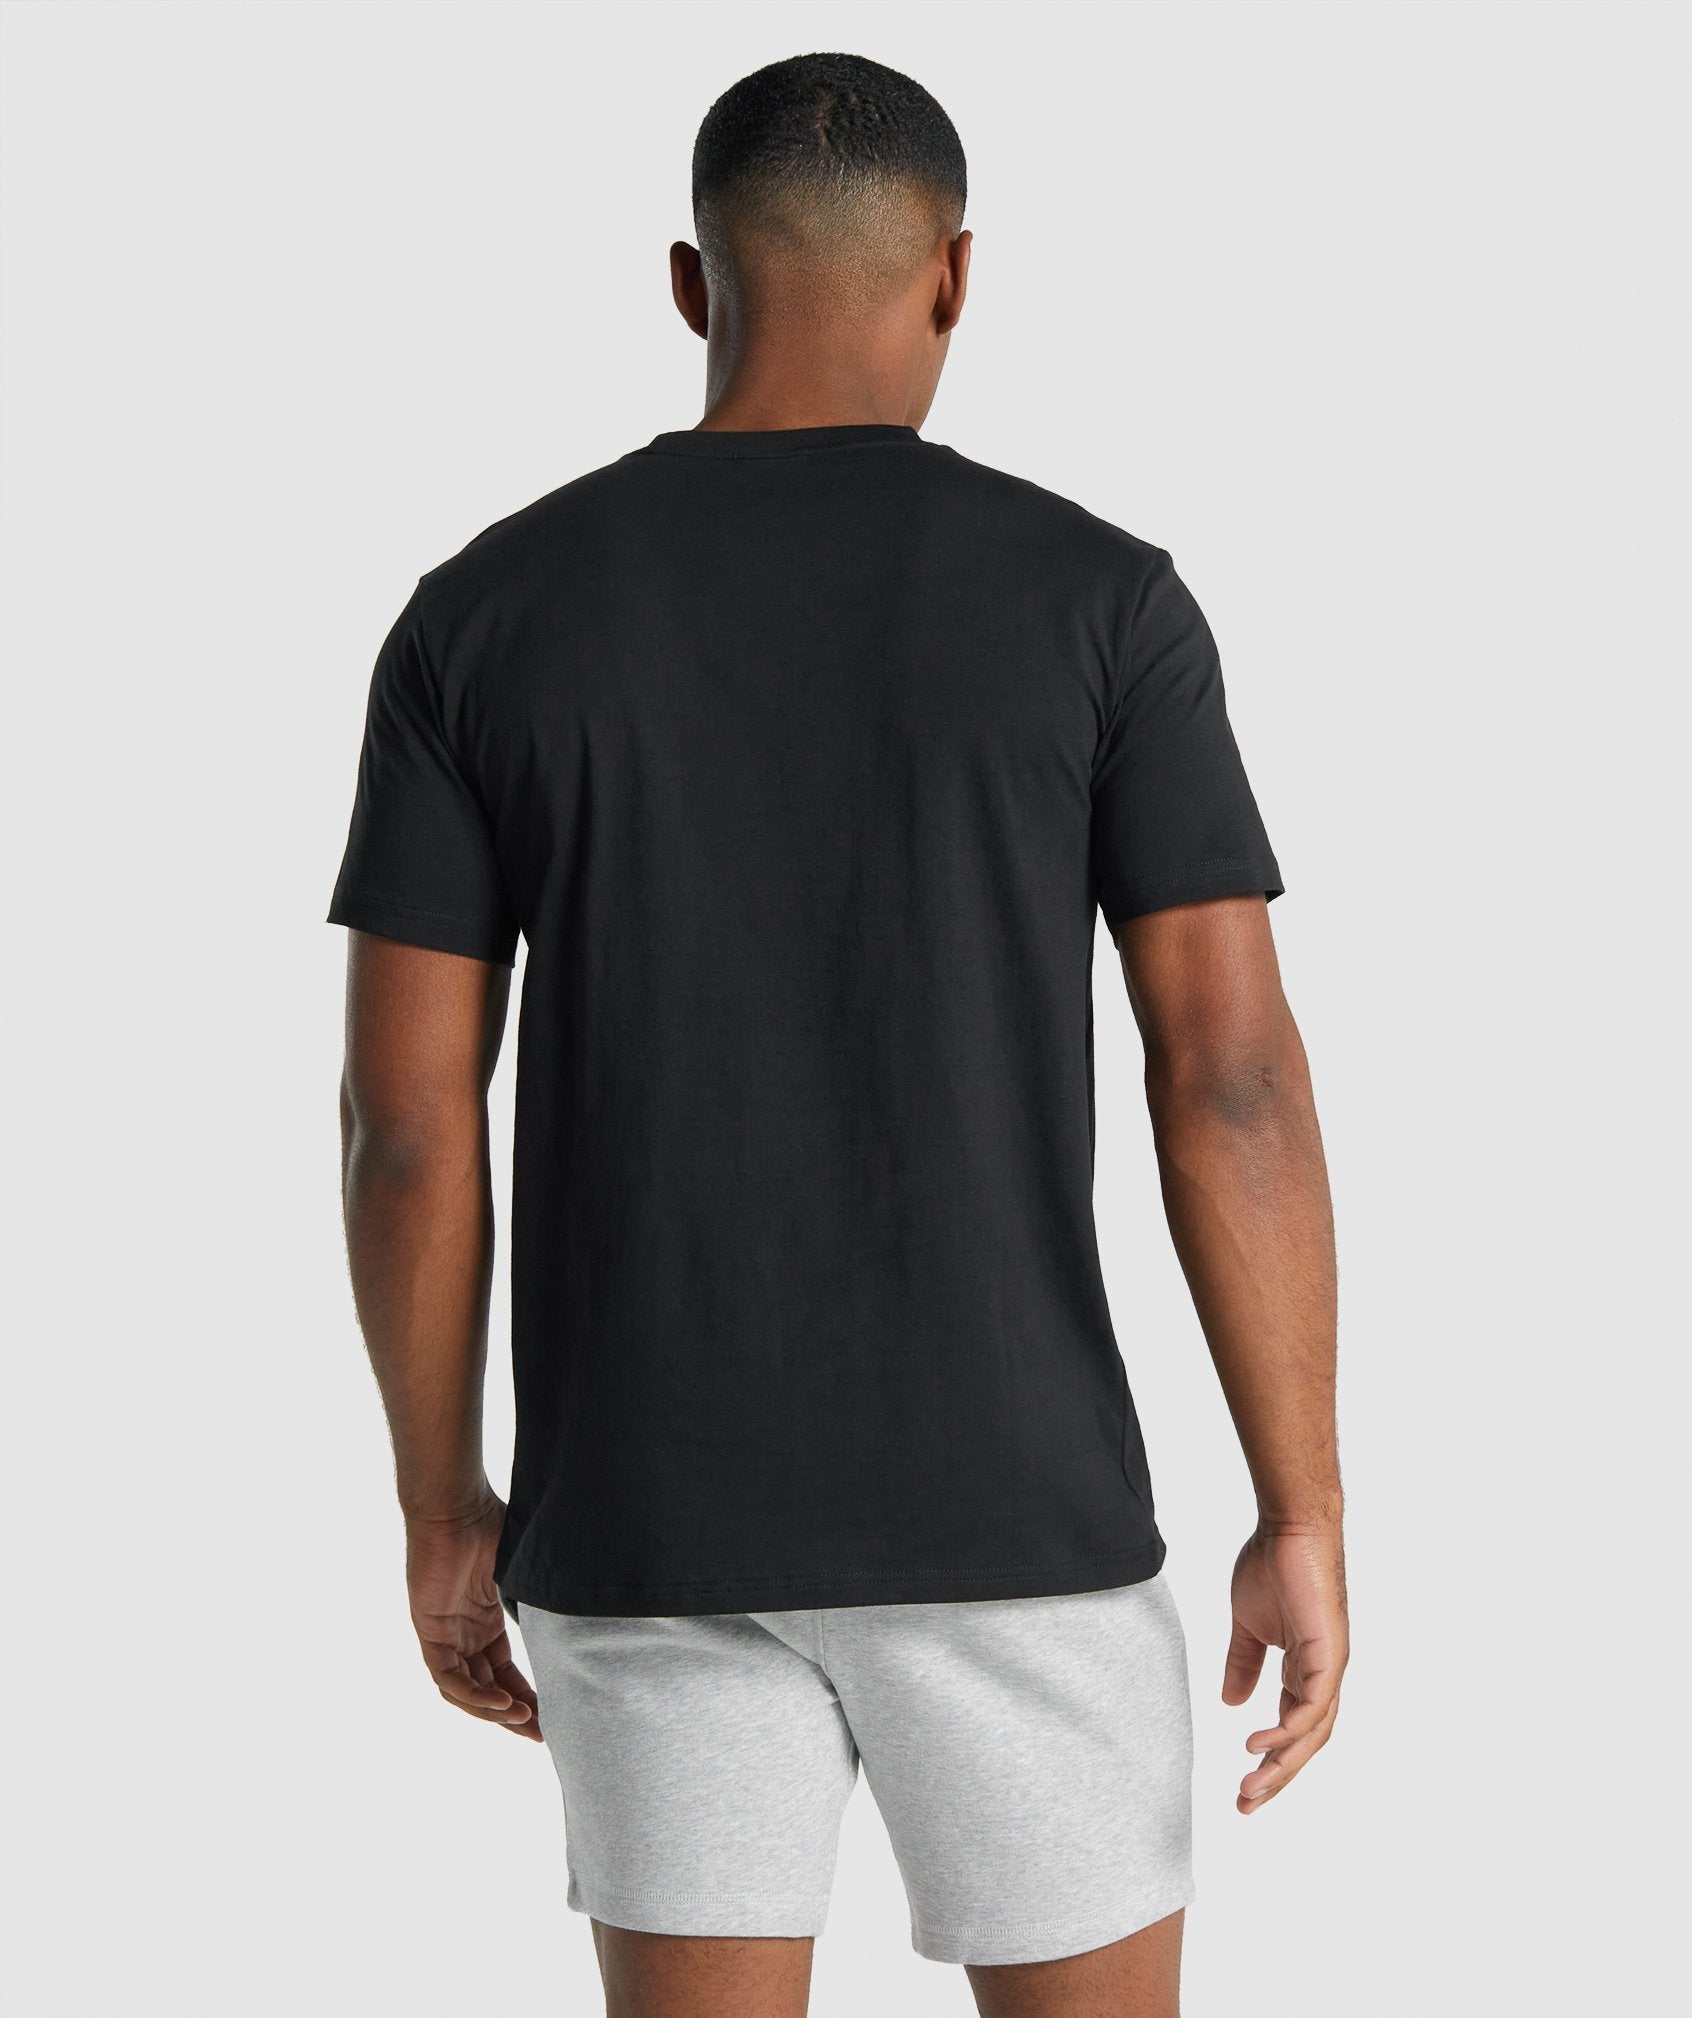 Gymshark Arrival T-Shirt - Black